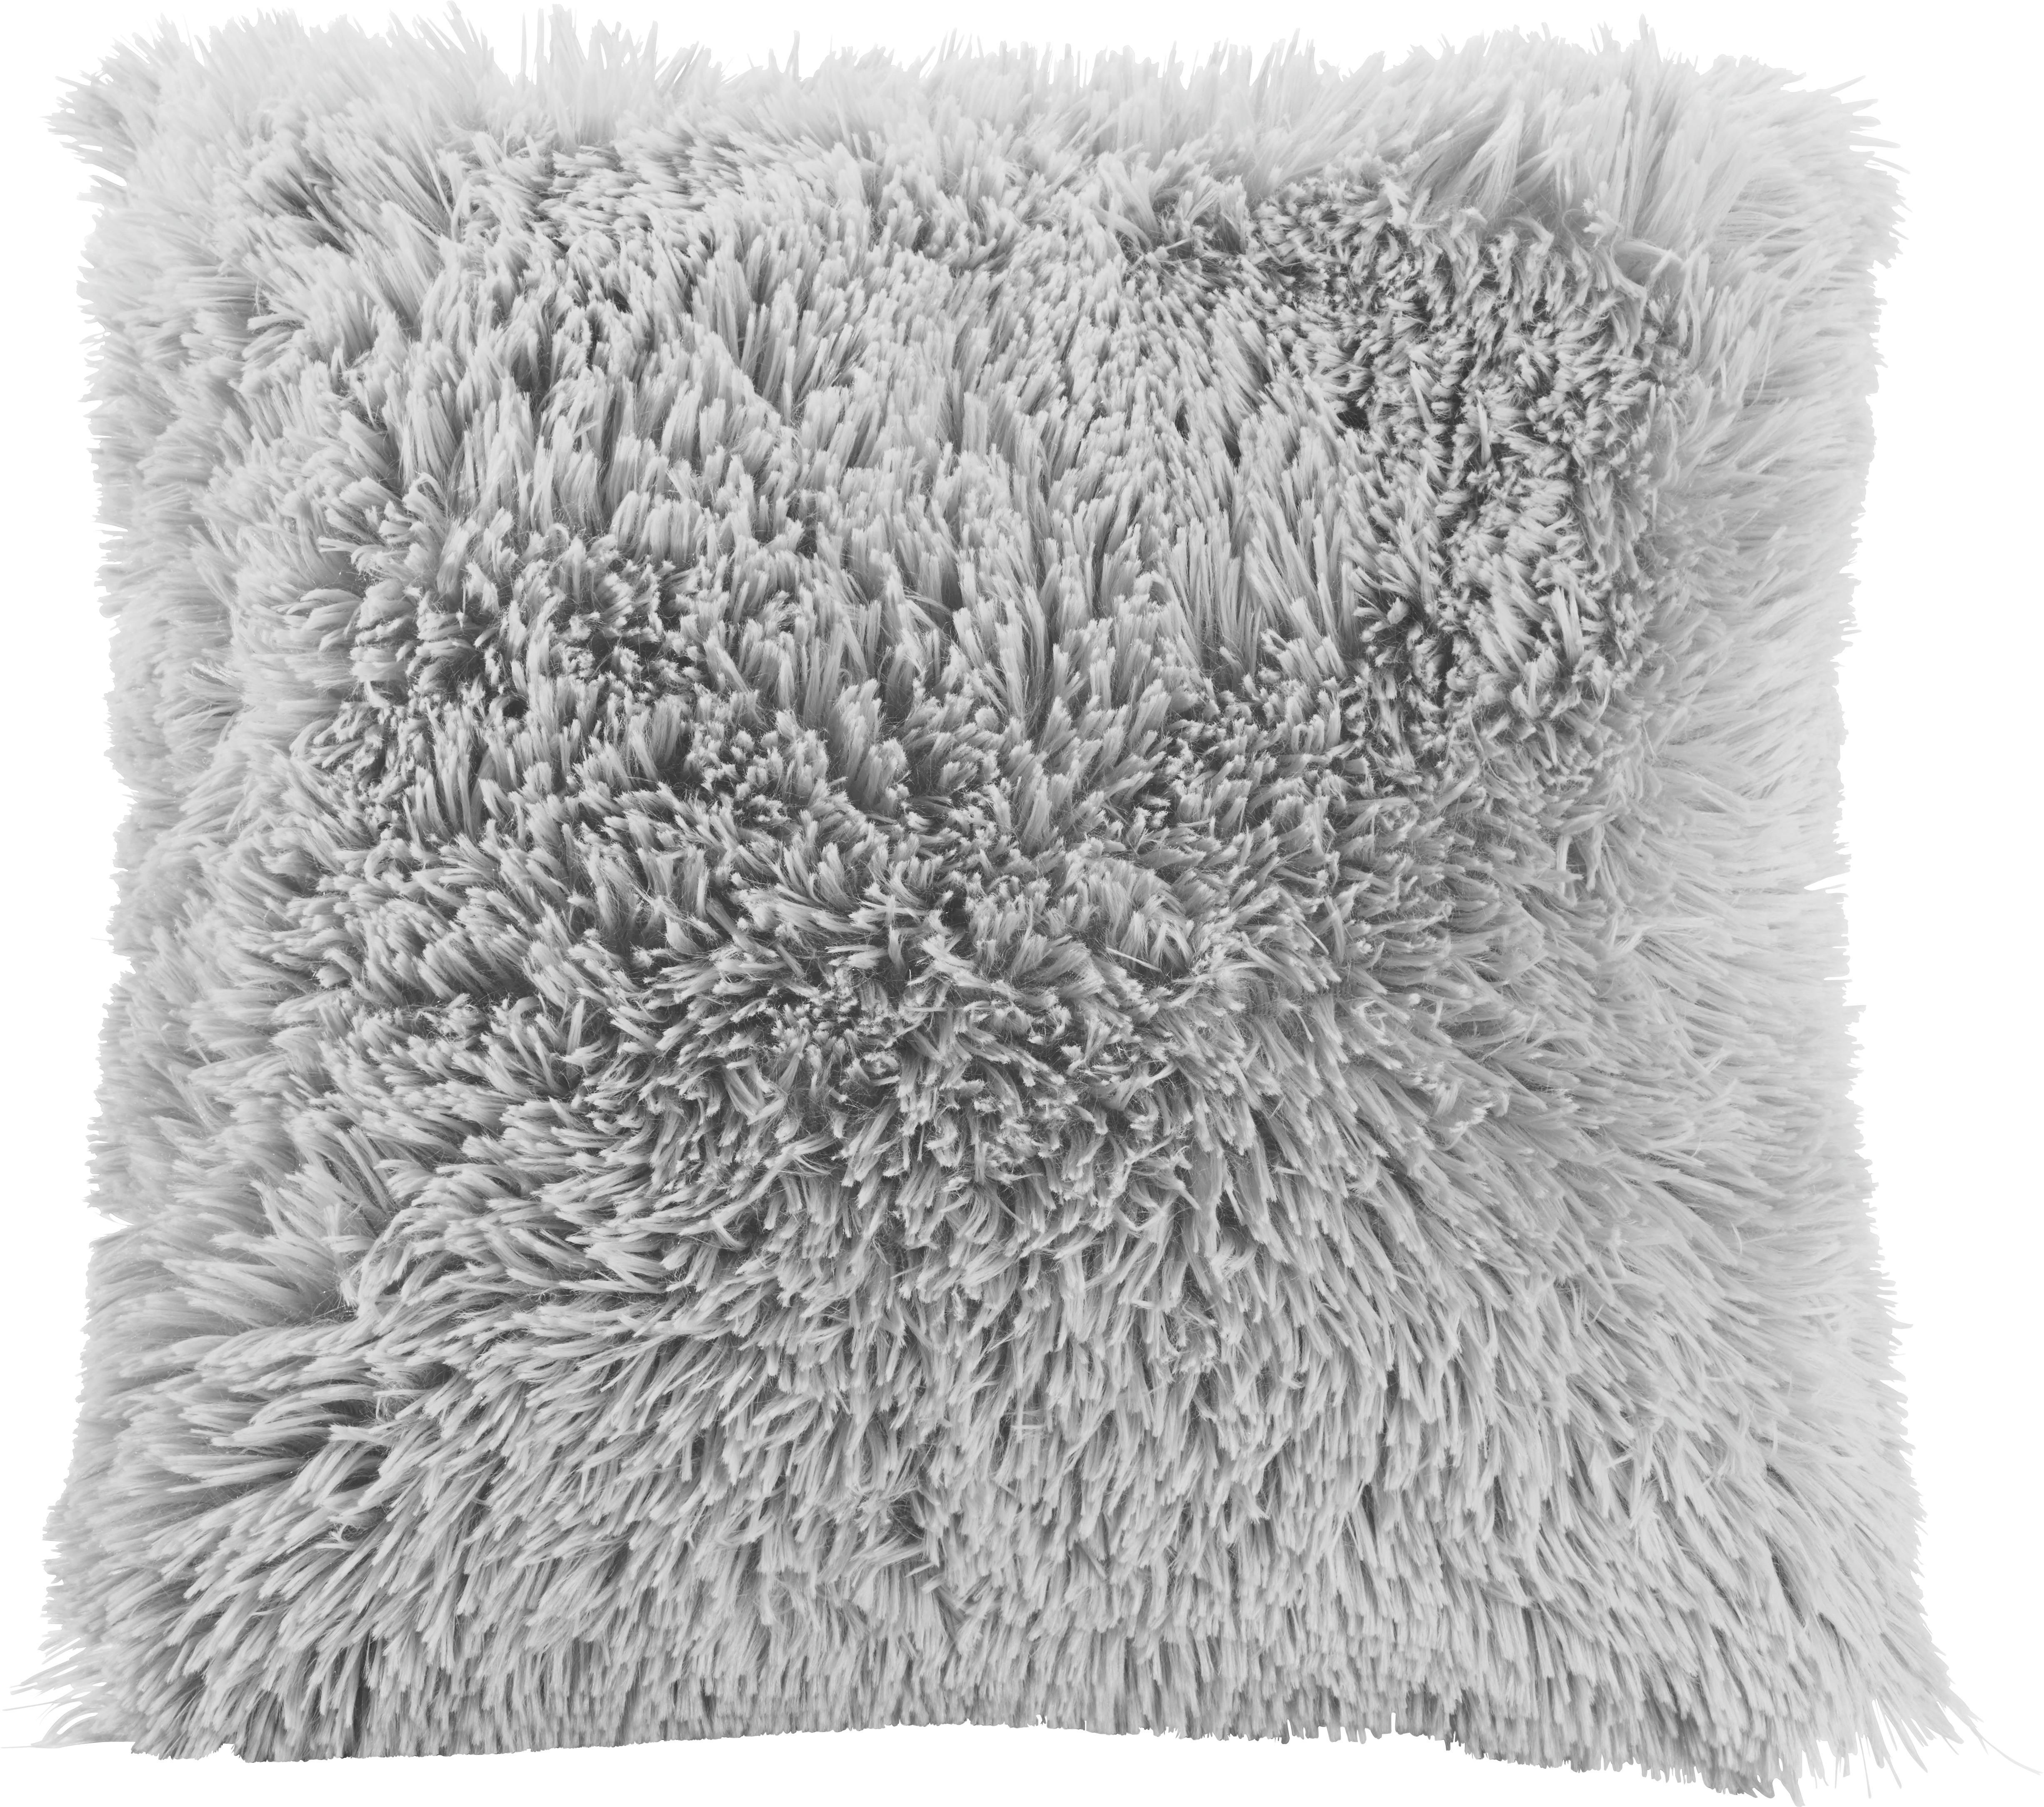 Zierkissen Fluffy in Hellgrau ca. 45x45cm - Hellgrau, Textil (45/45cm) - Modern Living